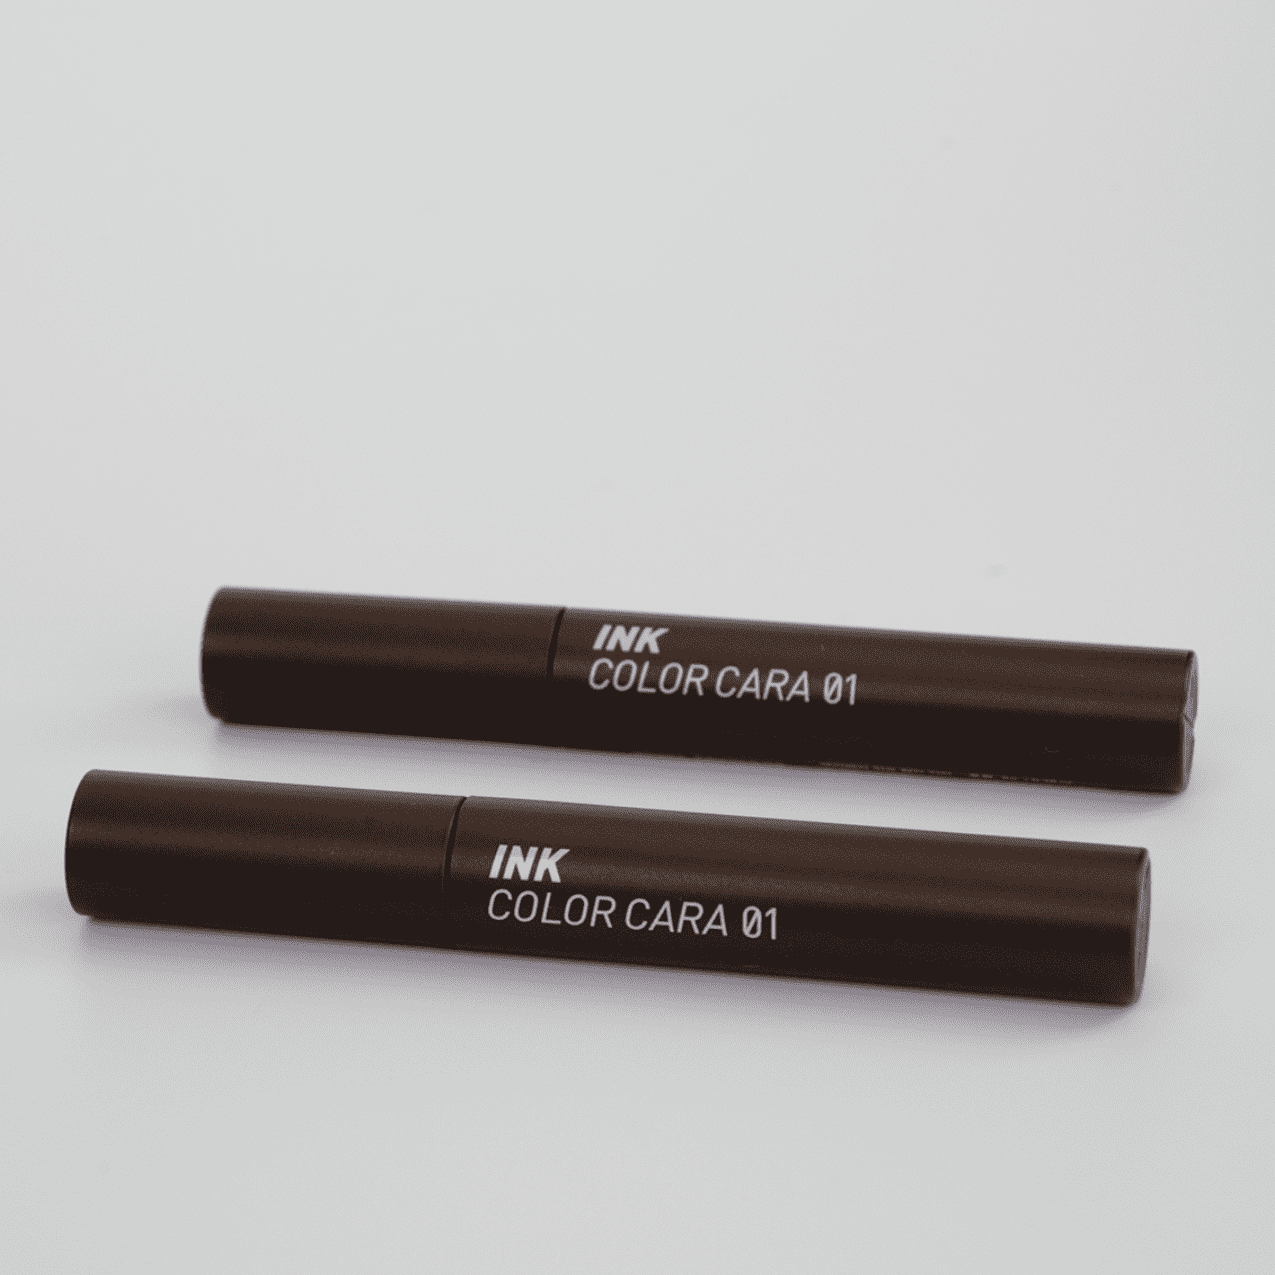 Ink Color Cara #01 Black Espresso | Mascara de pestañas larga duracion.